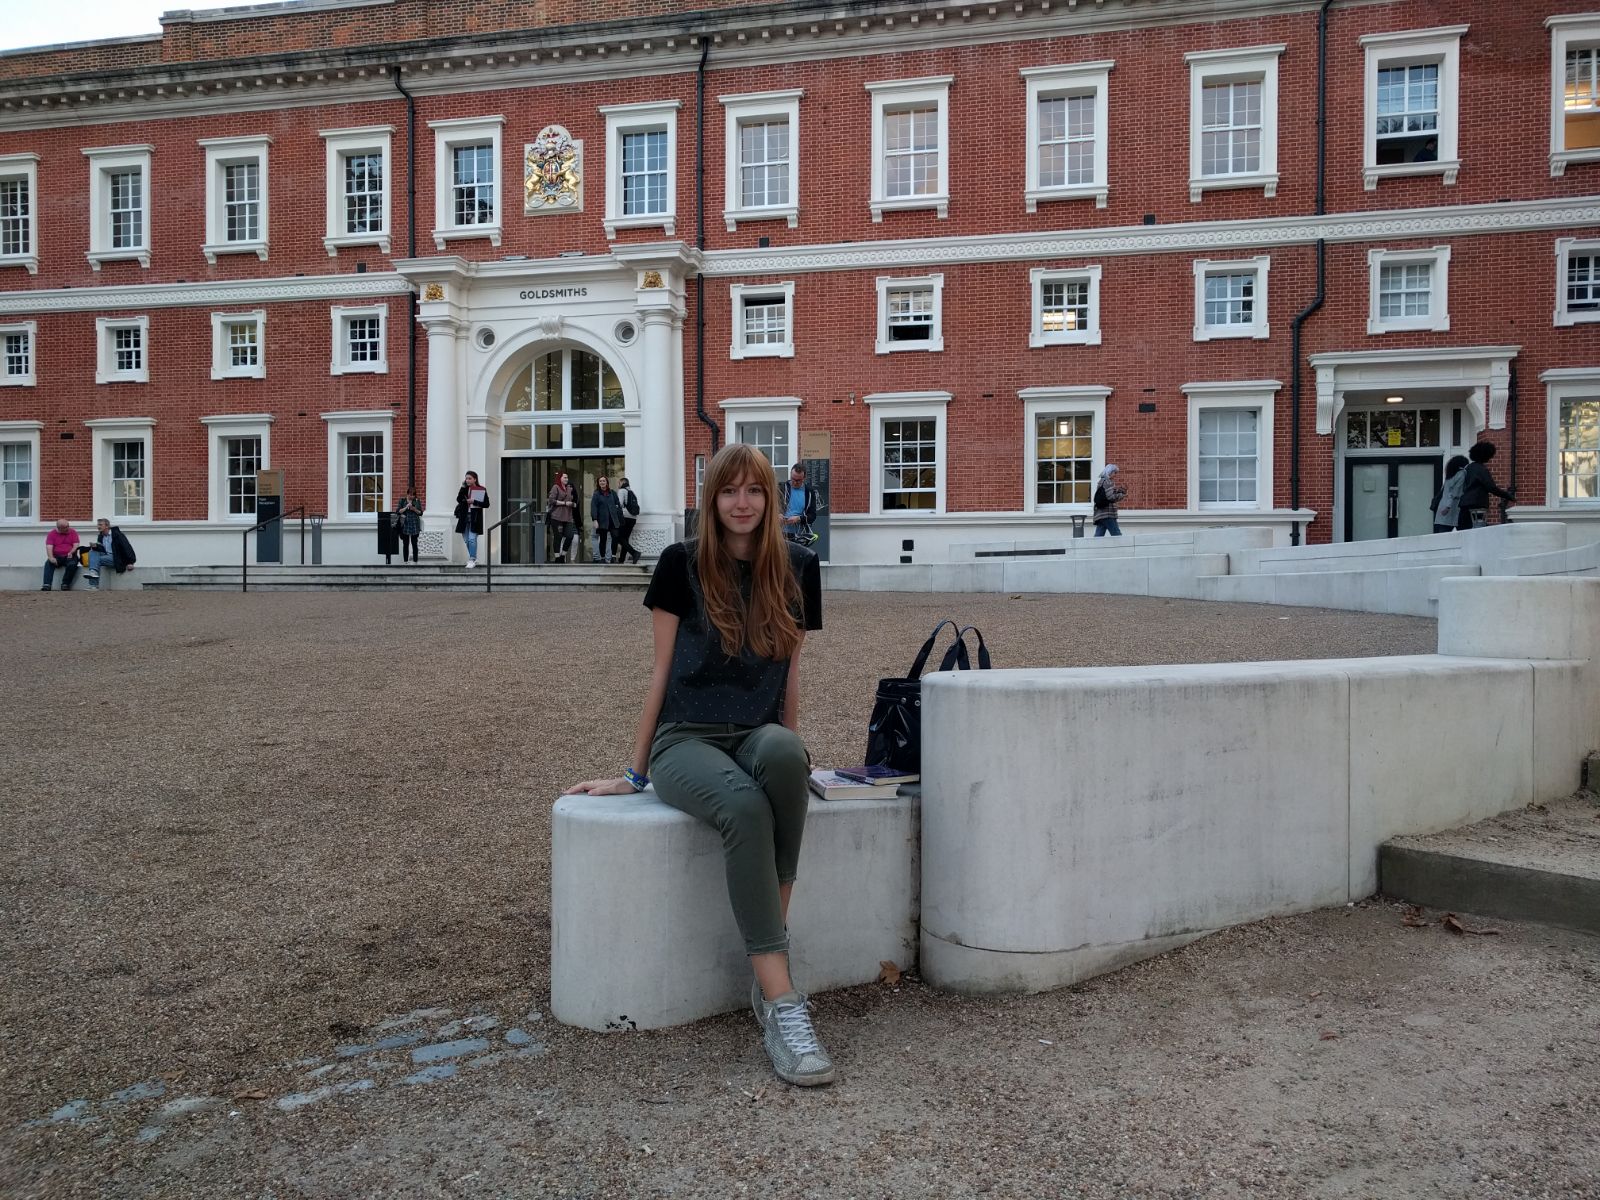 Cristina Ricci in front of Goldsmiths, University of London